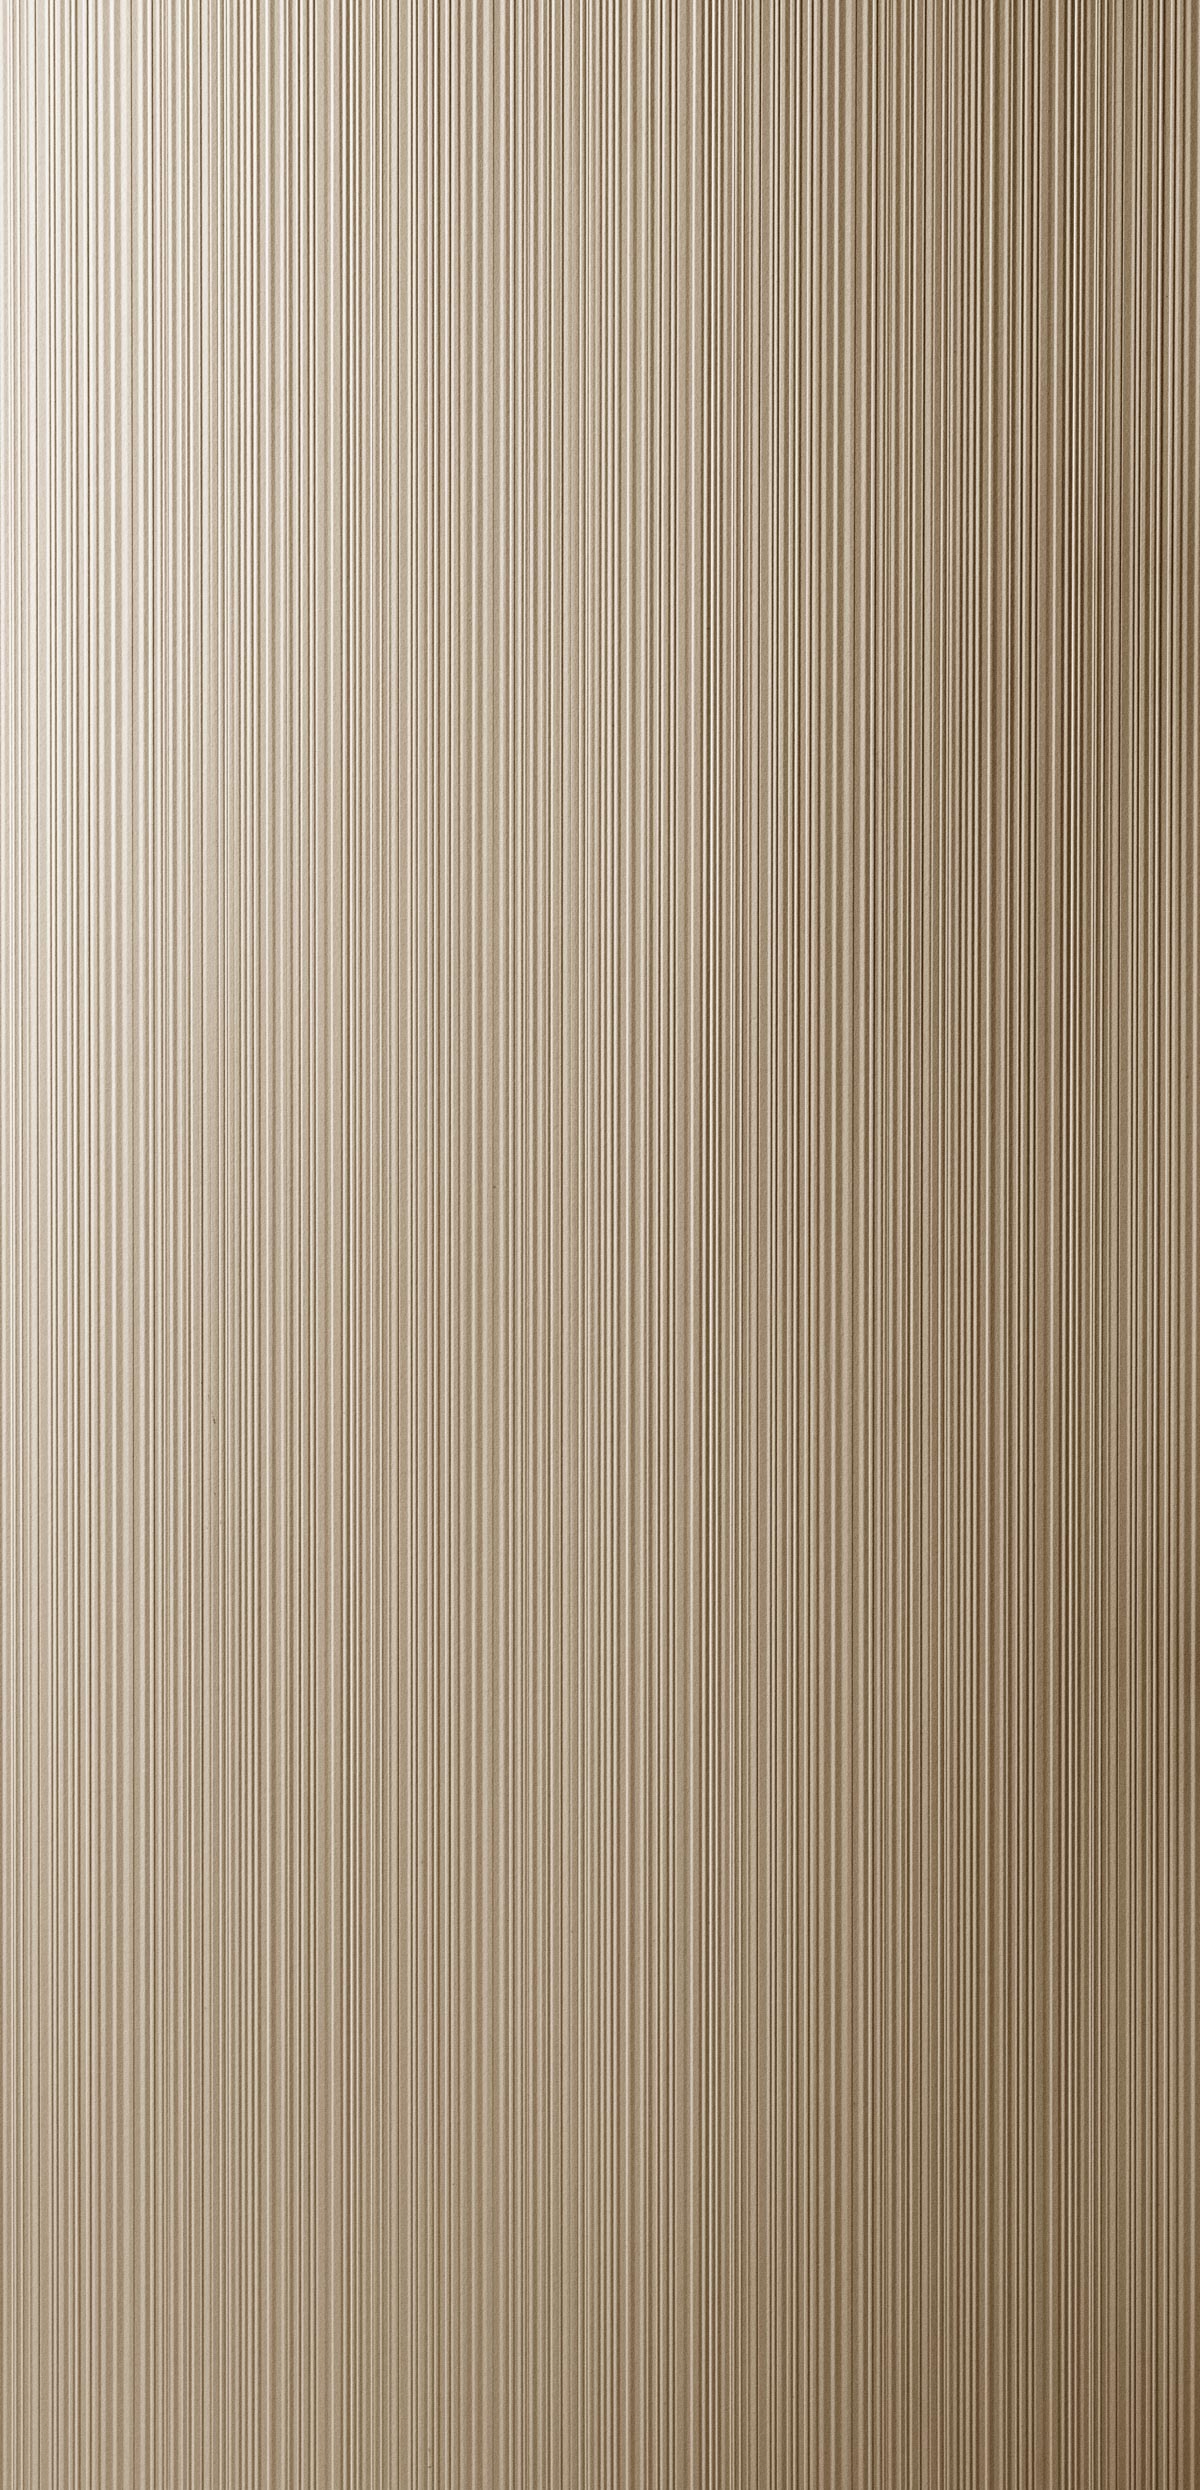 Lines Mastic 004-panel